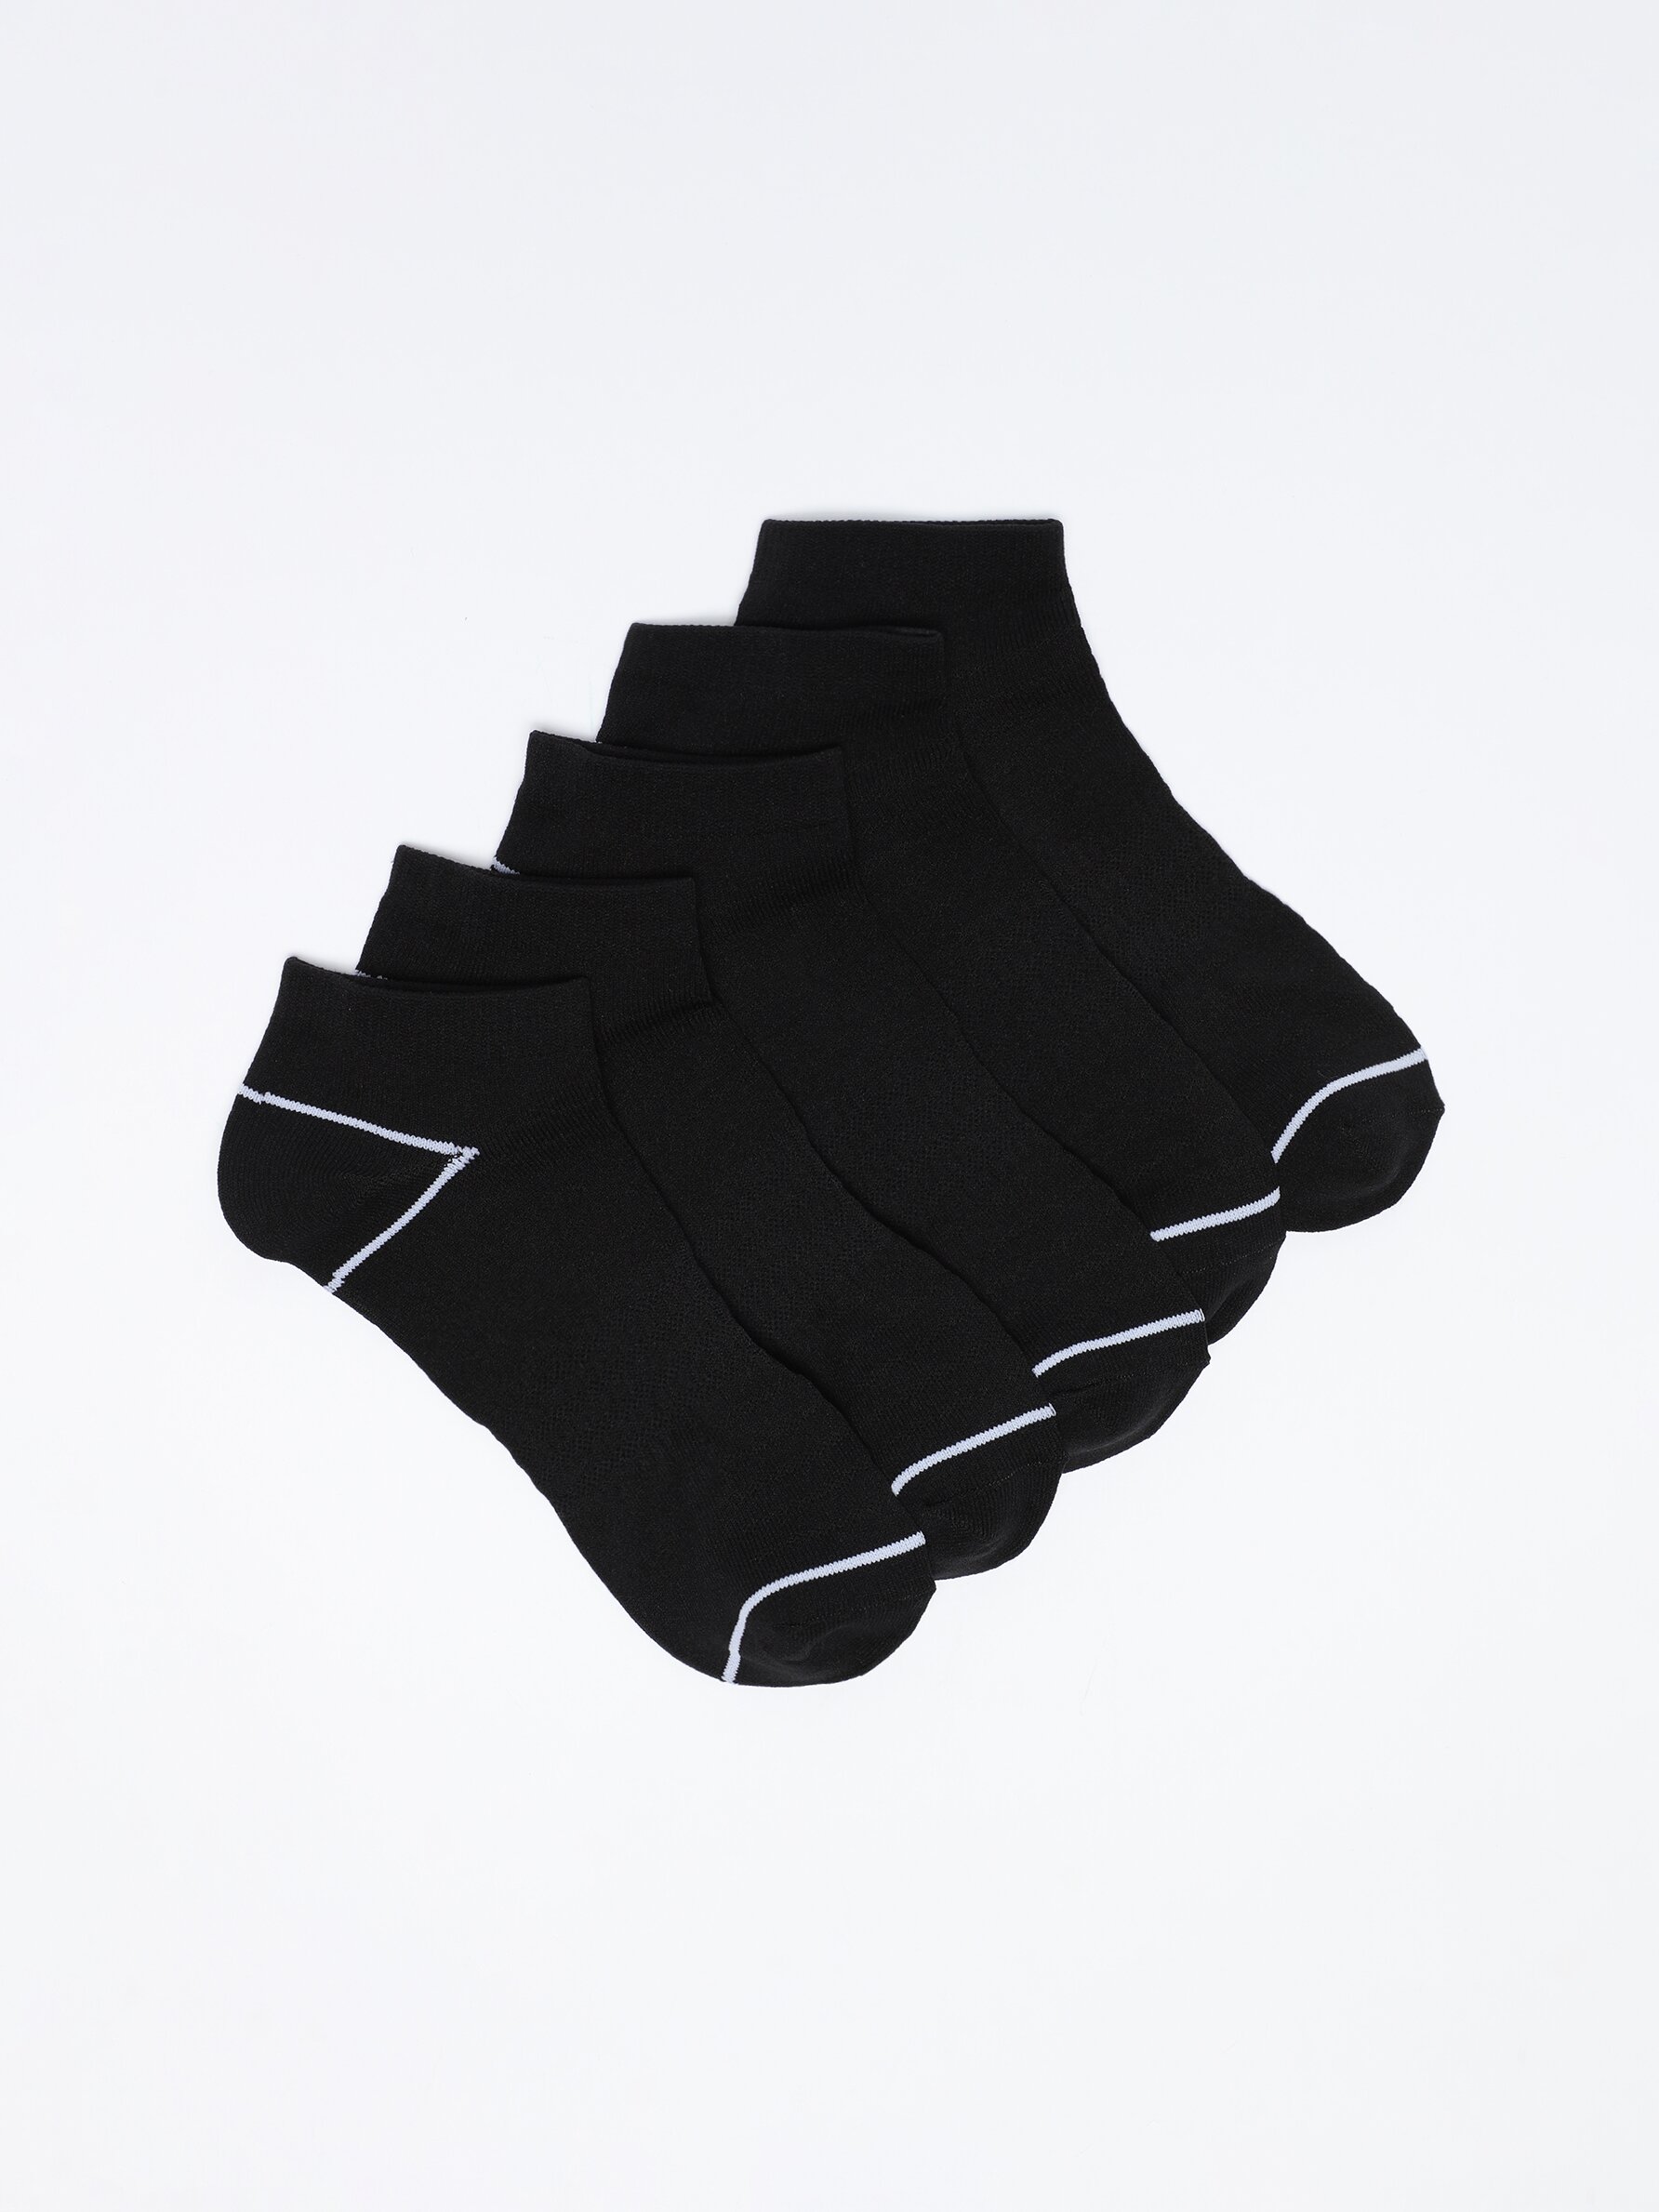 Pack de 5 calcetines tobilleros Deportivos - Calcetines Cortos